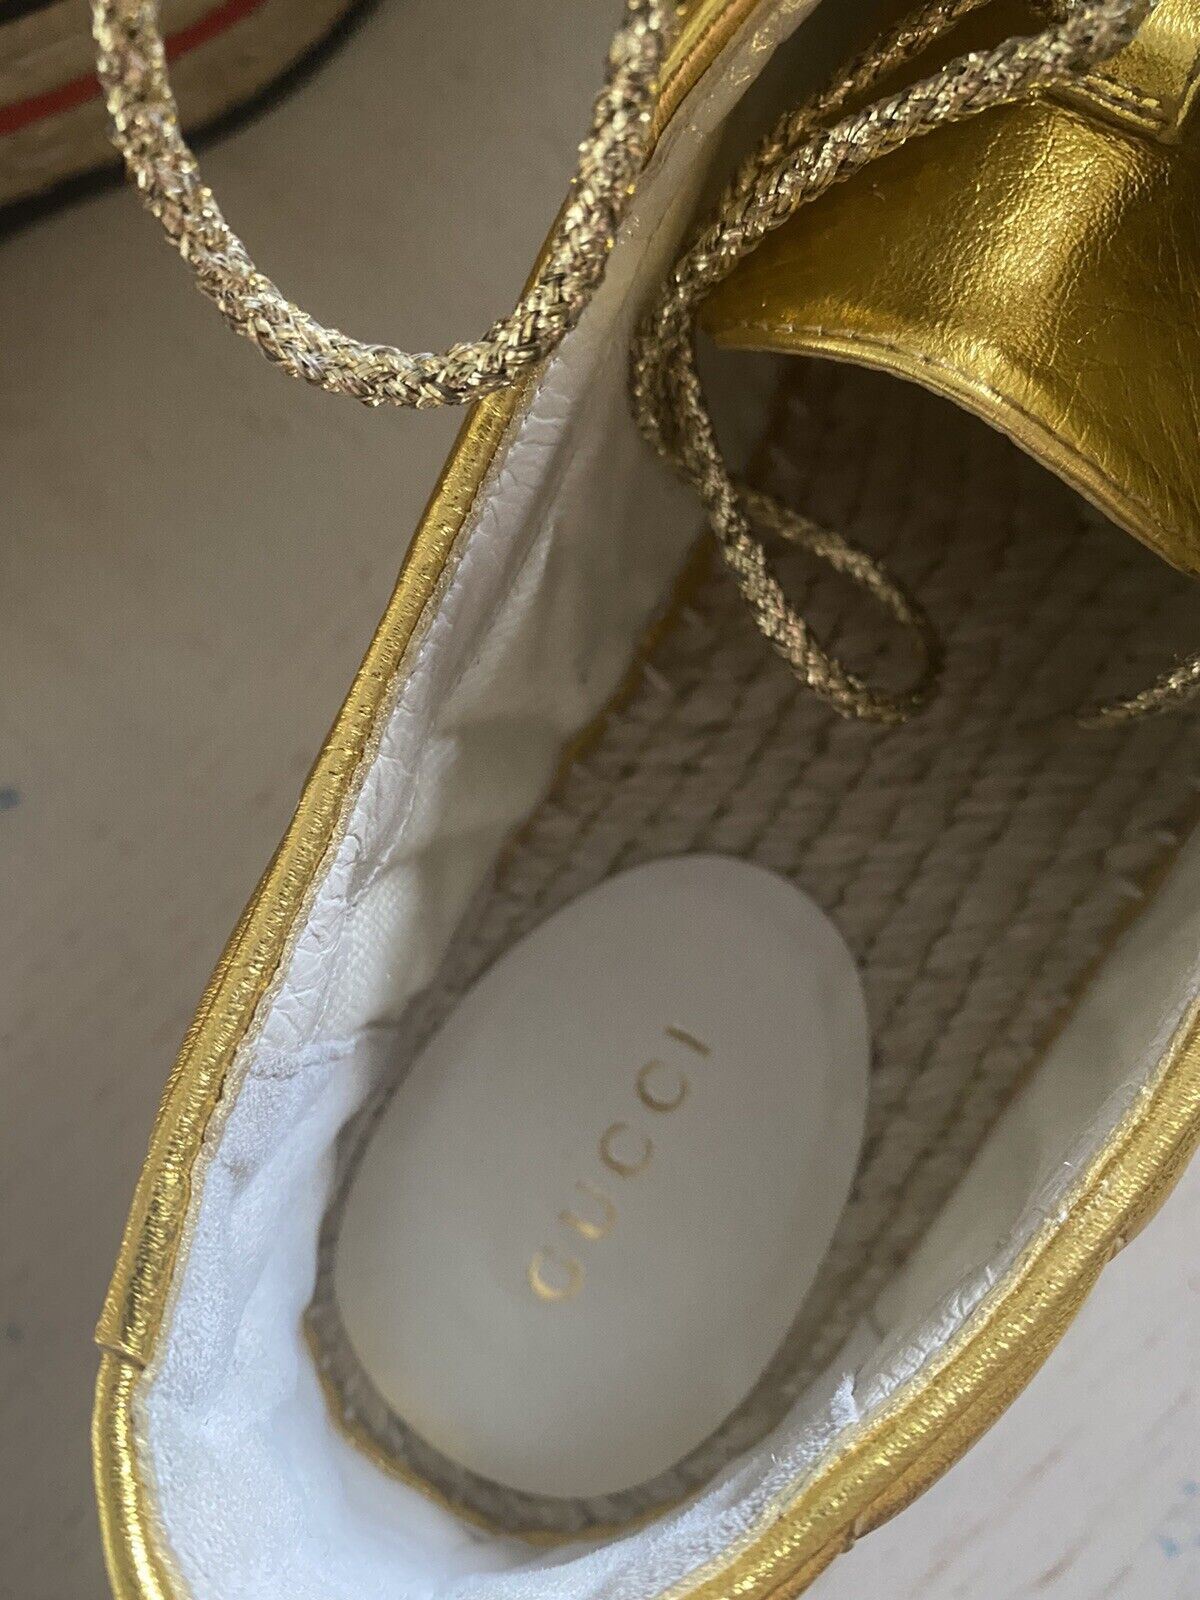 NIB $1500 Gucci Women Leather GG Espadrille Shoes Gold 6 US/37 Eu